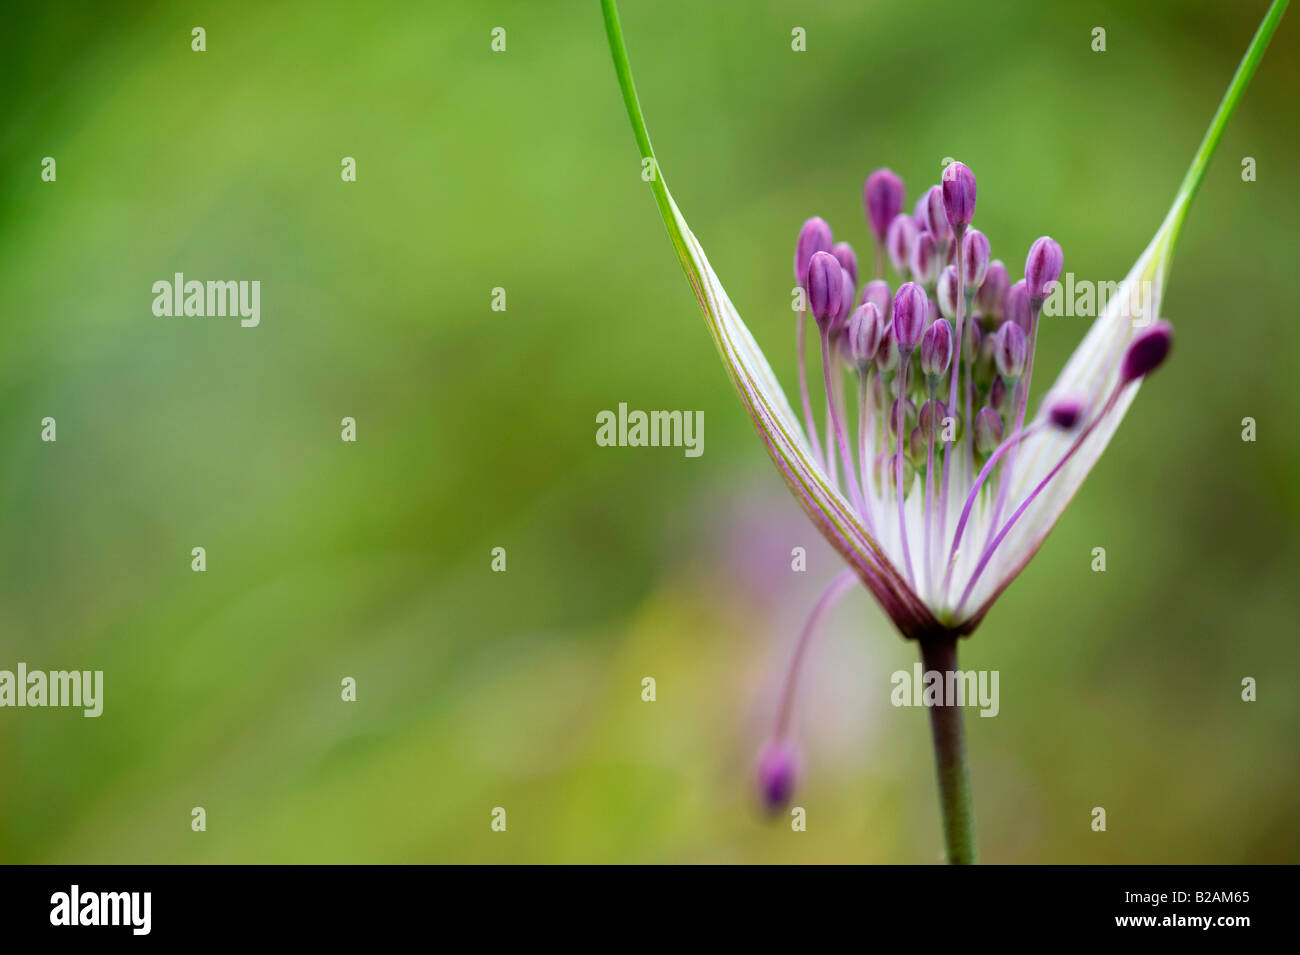 Allium carinatum subsp. pulchellum. Keeled garlic flowers opening. UK Stock Photo